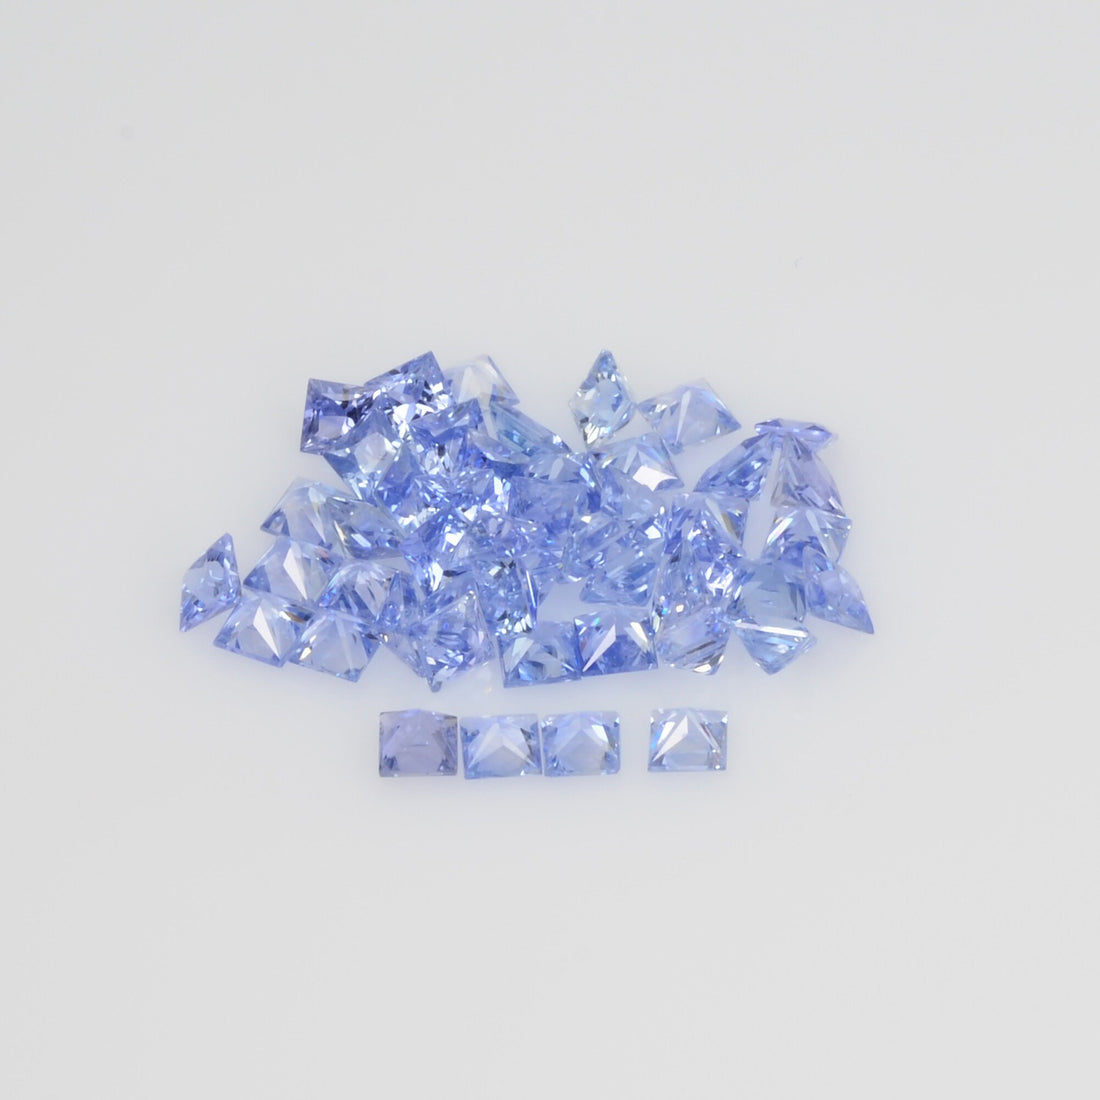 2.8-3.3 MM Natural Princess Cut Blue Sapphire Loose Gemstone